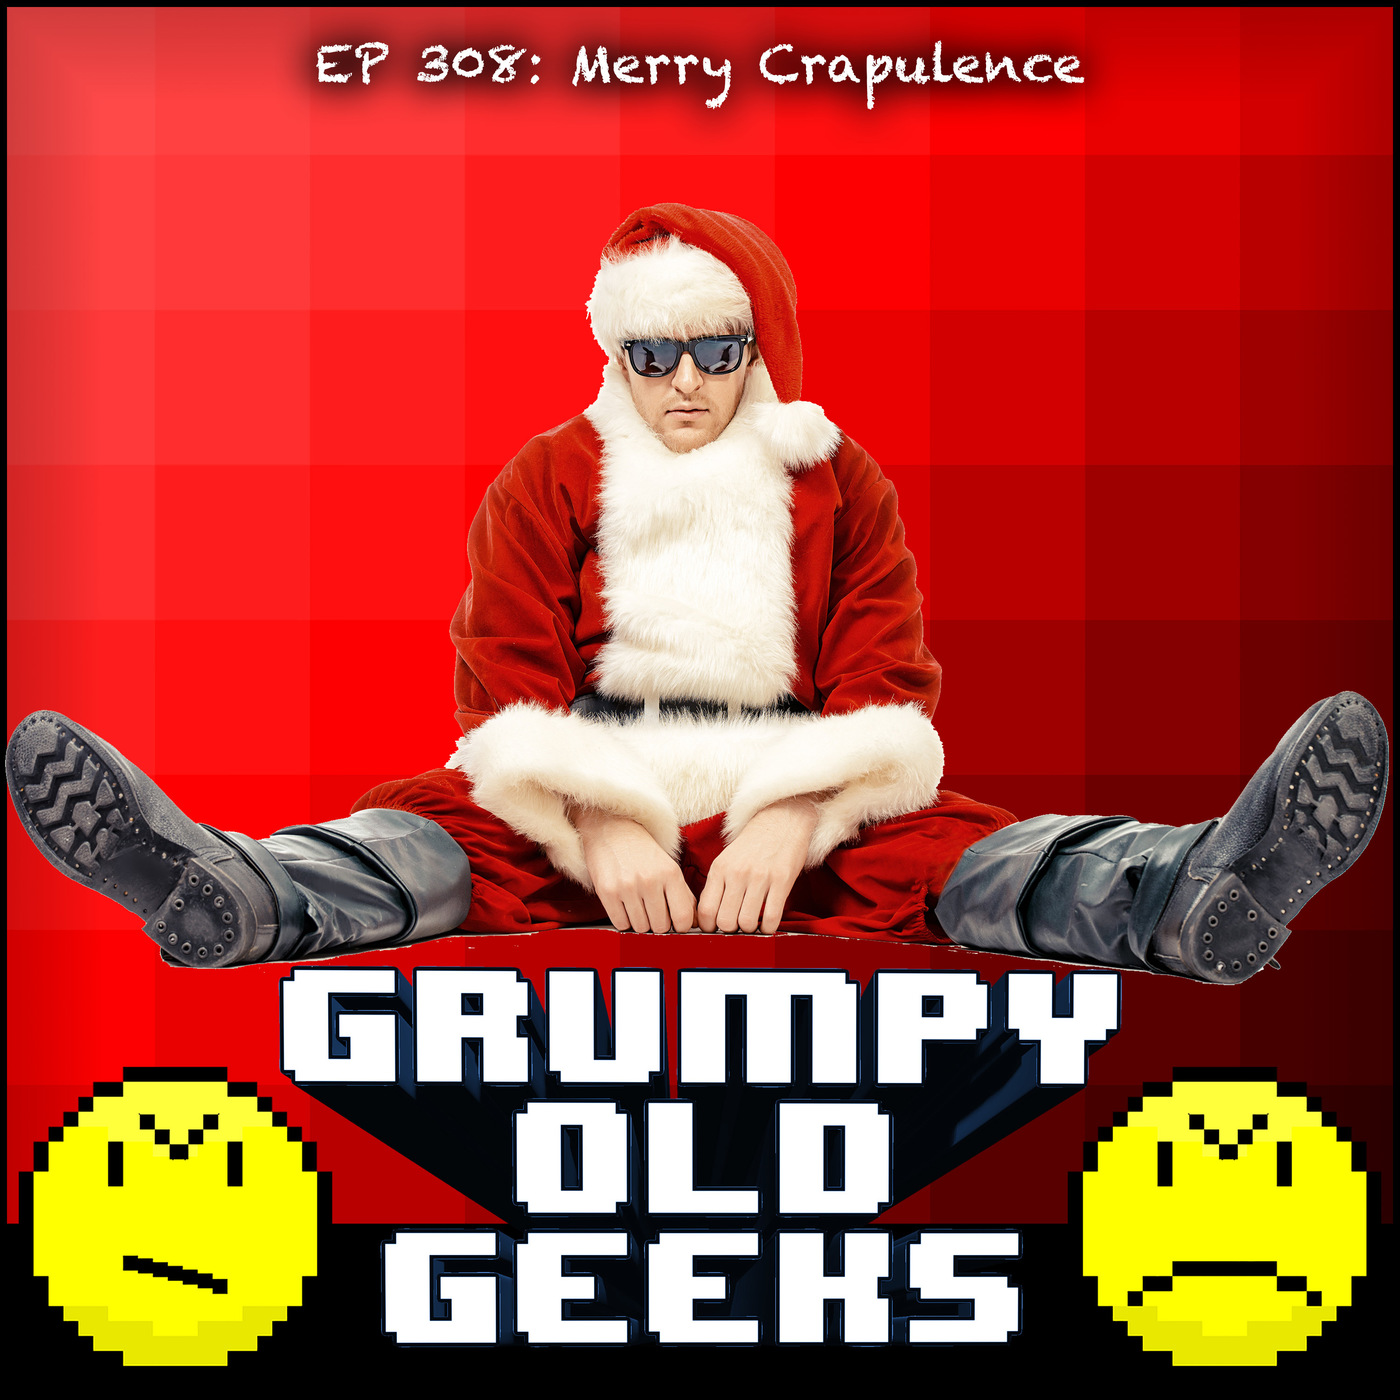 308: Merry Crapulence